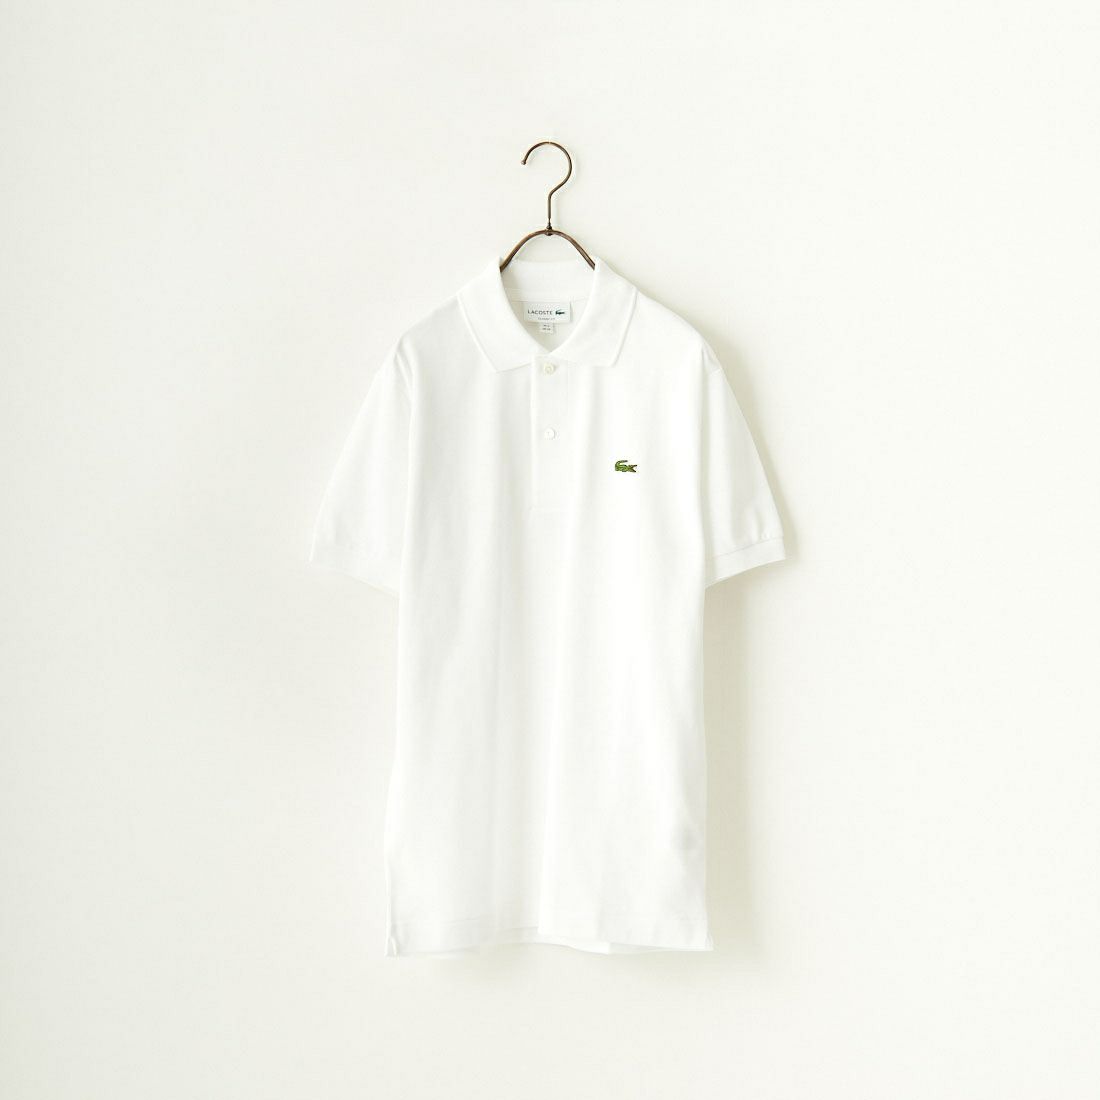 LACOSTE [ラコステ] クラシックフィット ポロシャツ [L1212] 001 WHITE